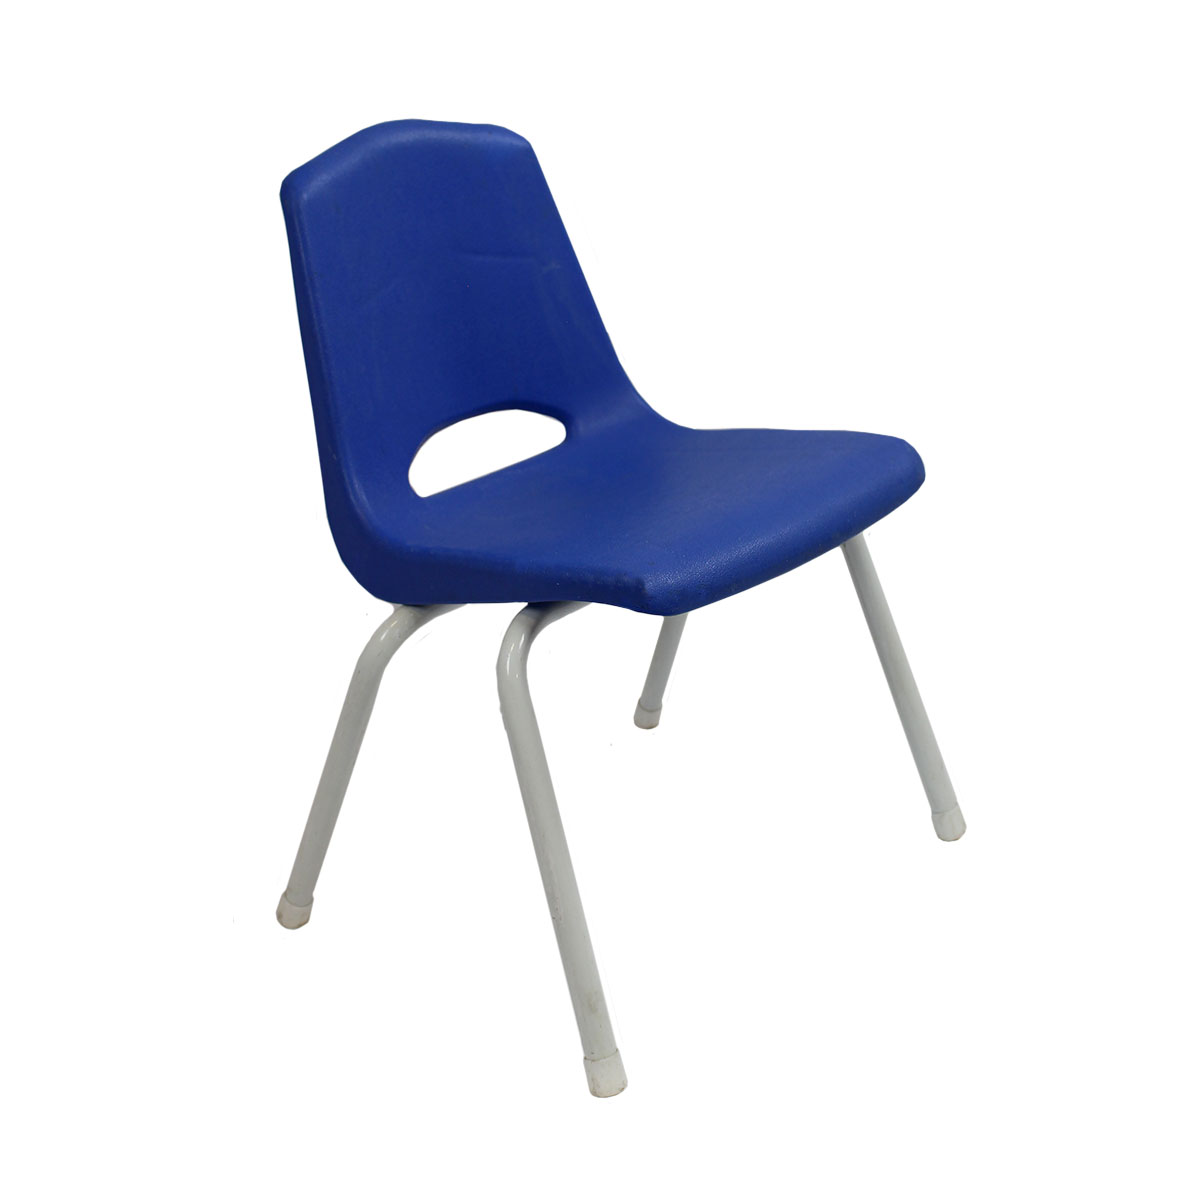 Chair Blue Seat White Leg Stacking Child Size 14"